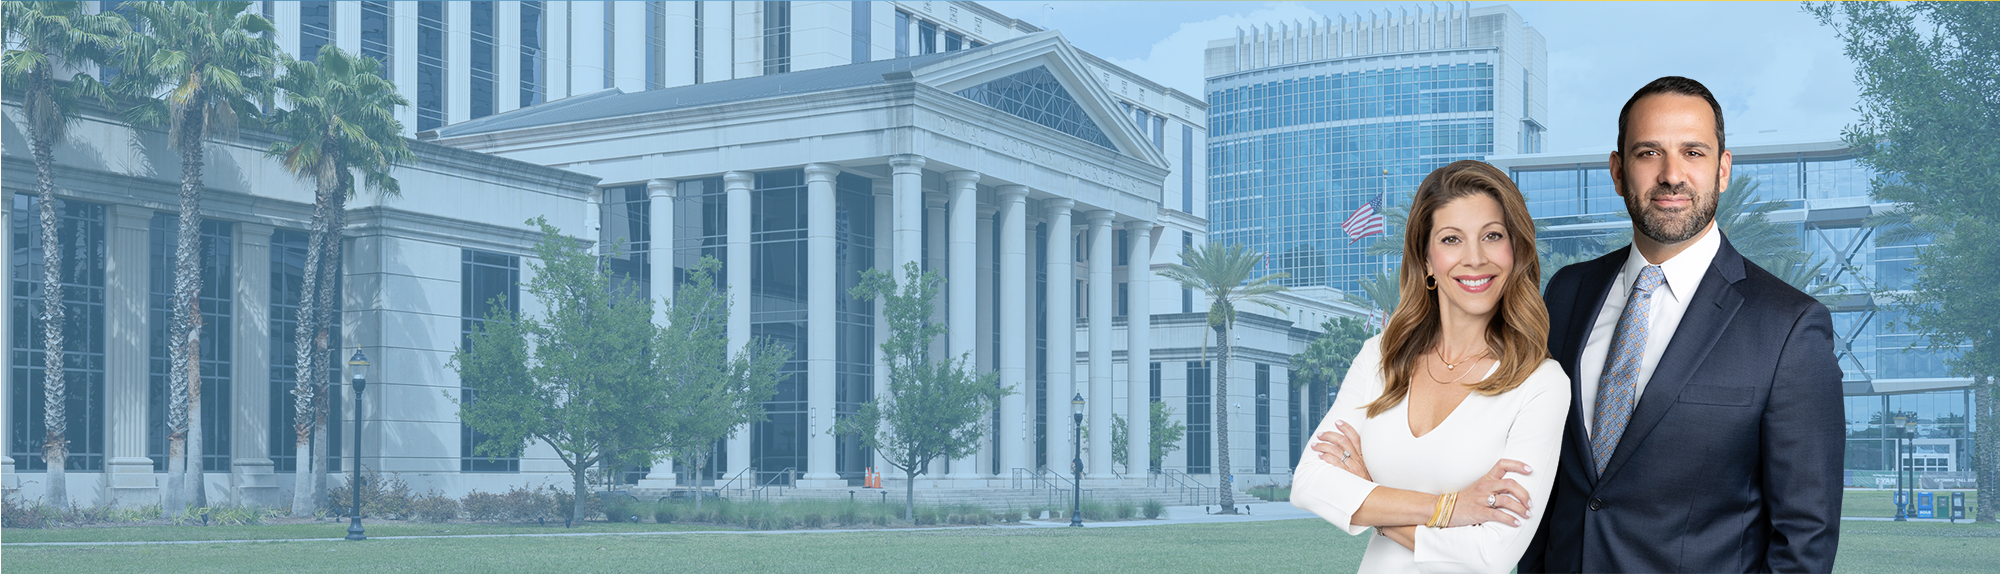 Baggett Law Personal Injury Lawyers - Law Firm in Jacksonville, FL